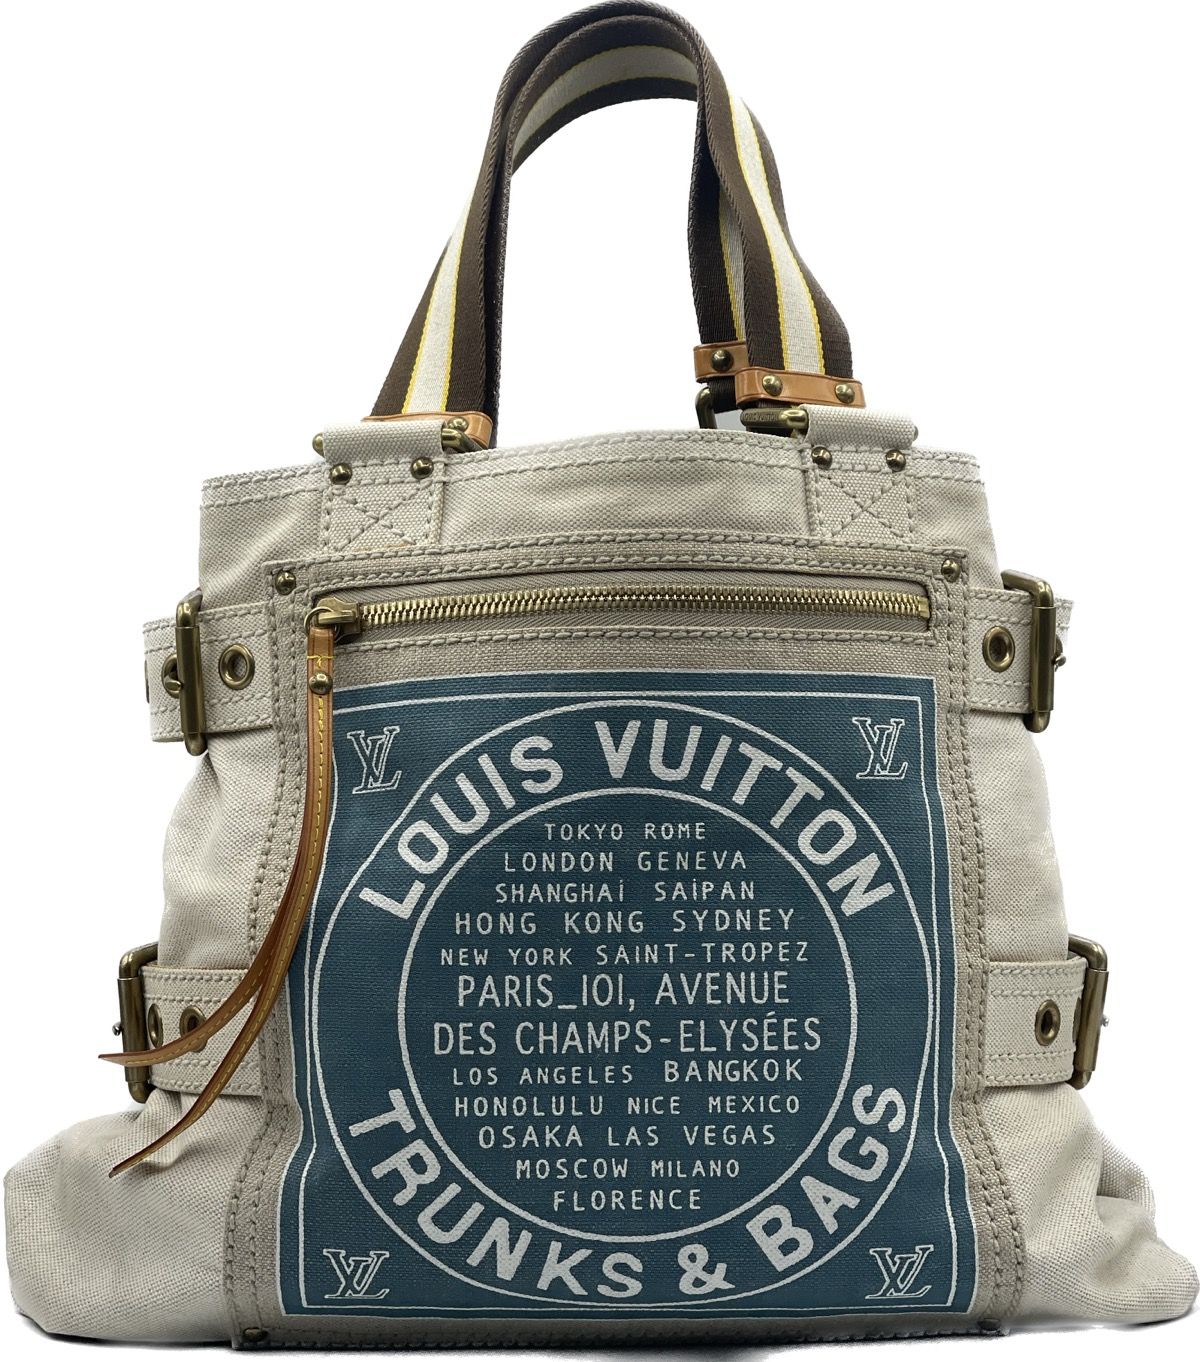 Lot 39 - Louis Vuitton Globe Shopper 'Trunks & Bags